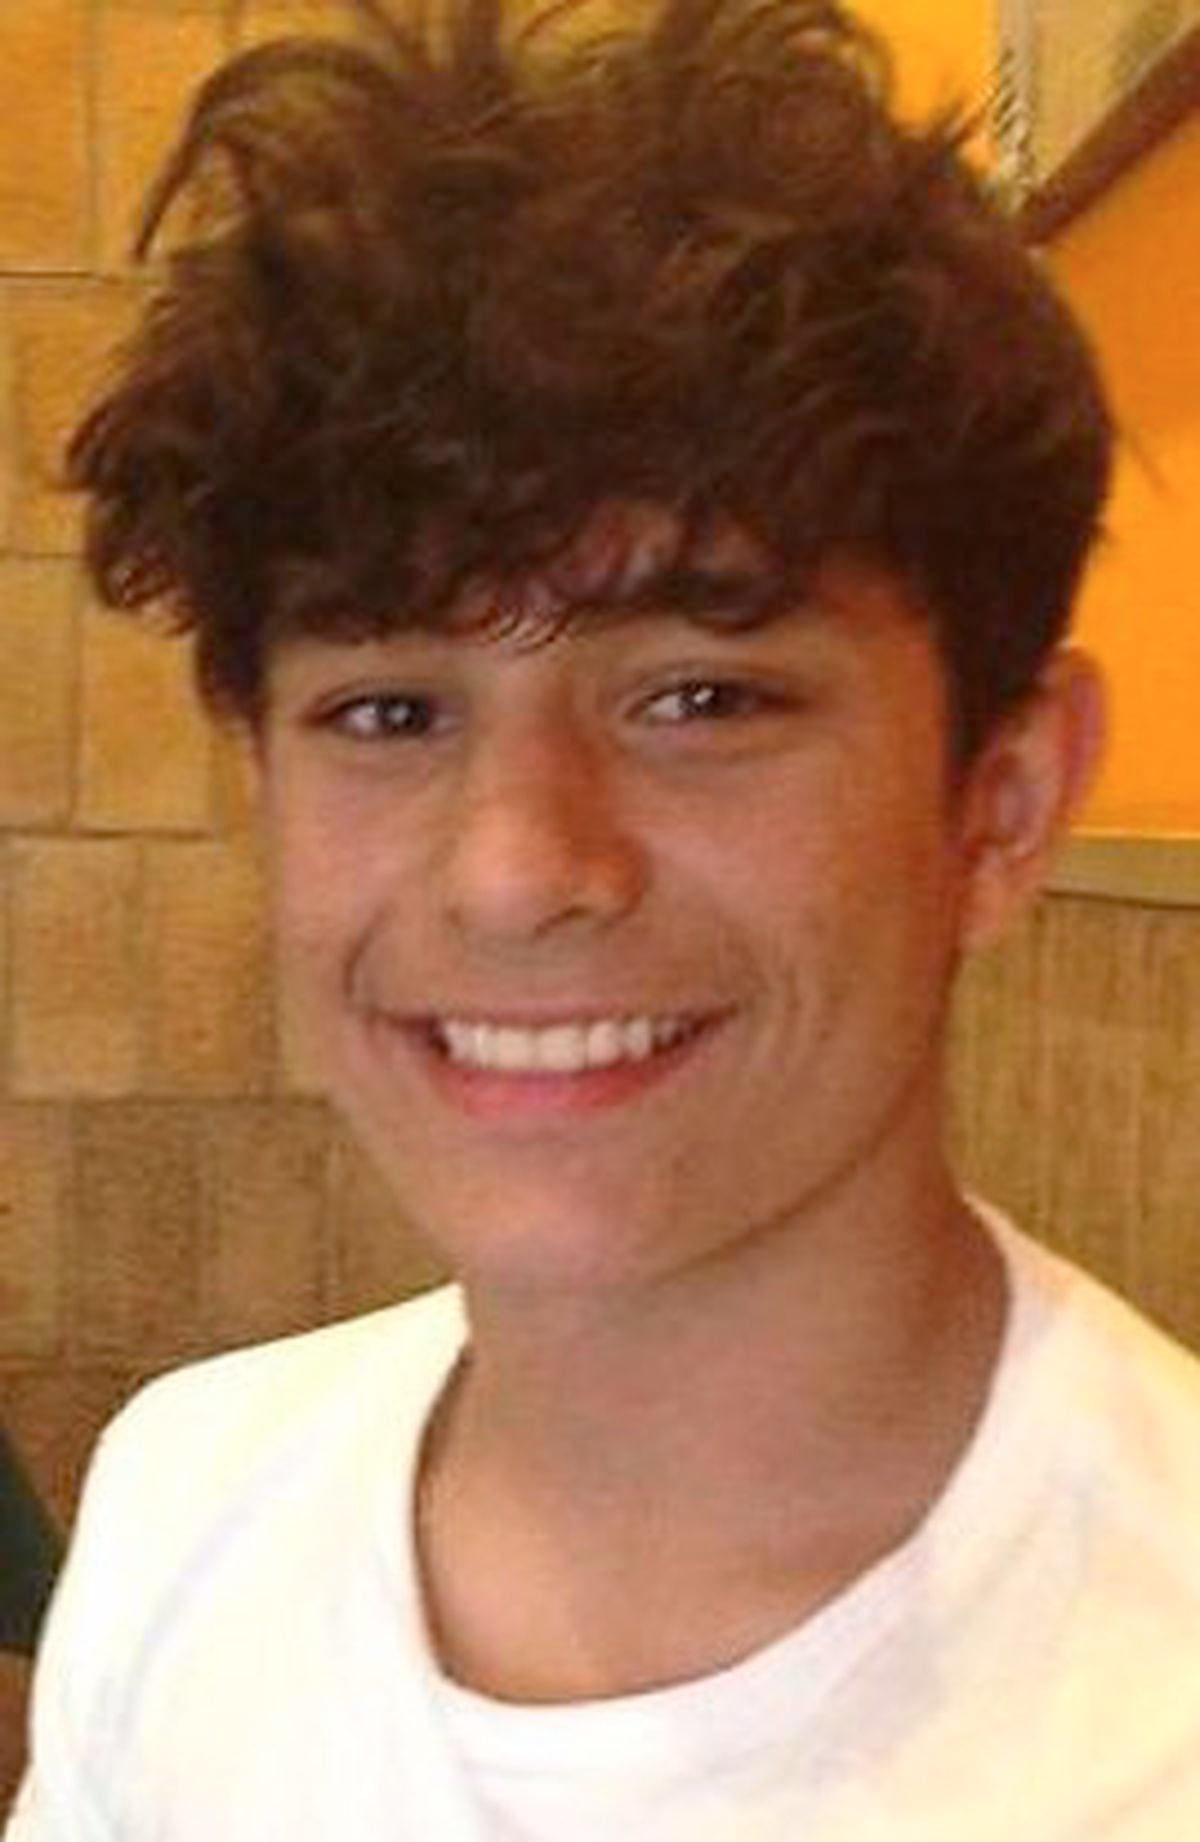 Felix Alexander, 17, killed himself after cyber-bullying